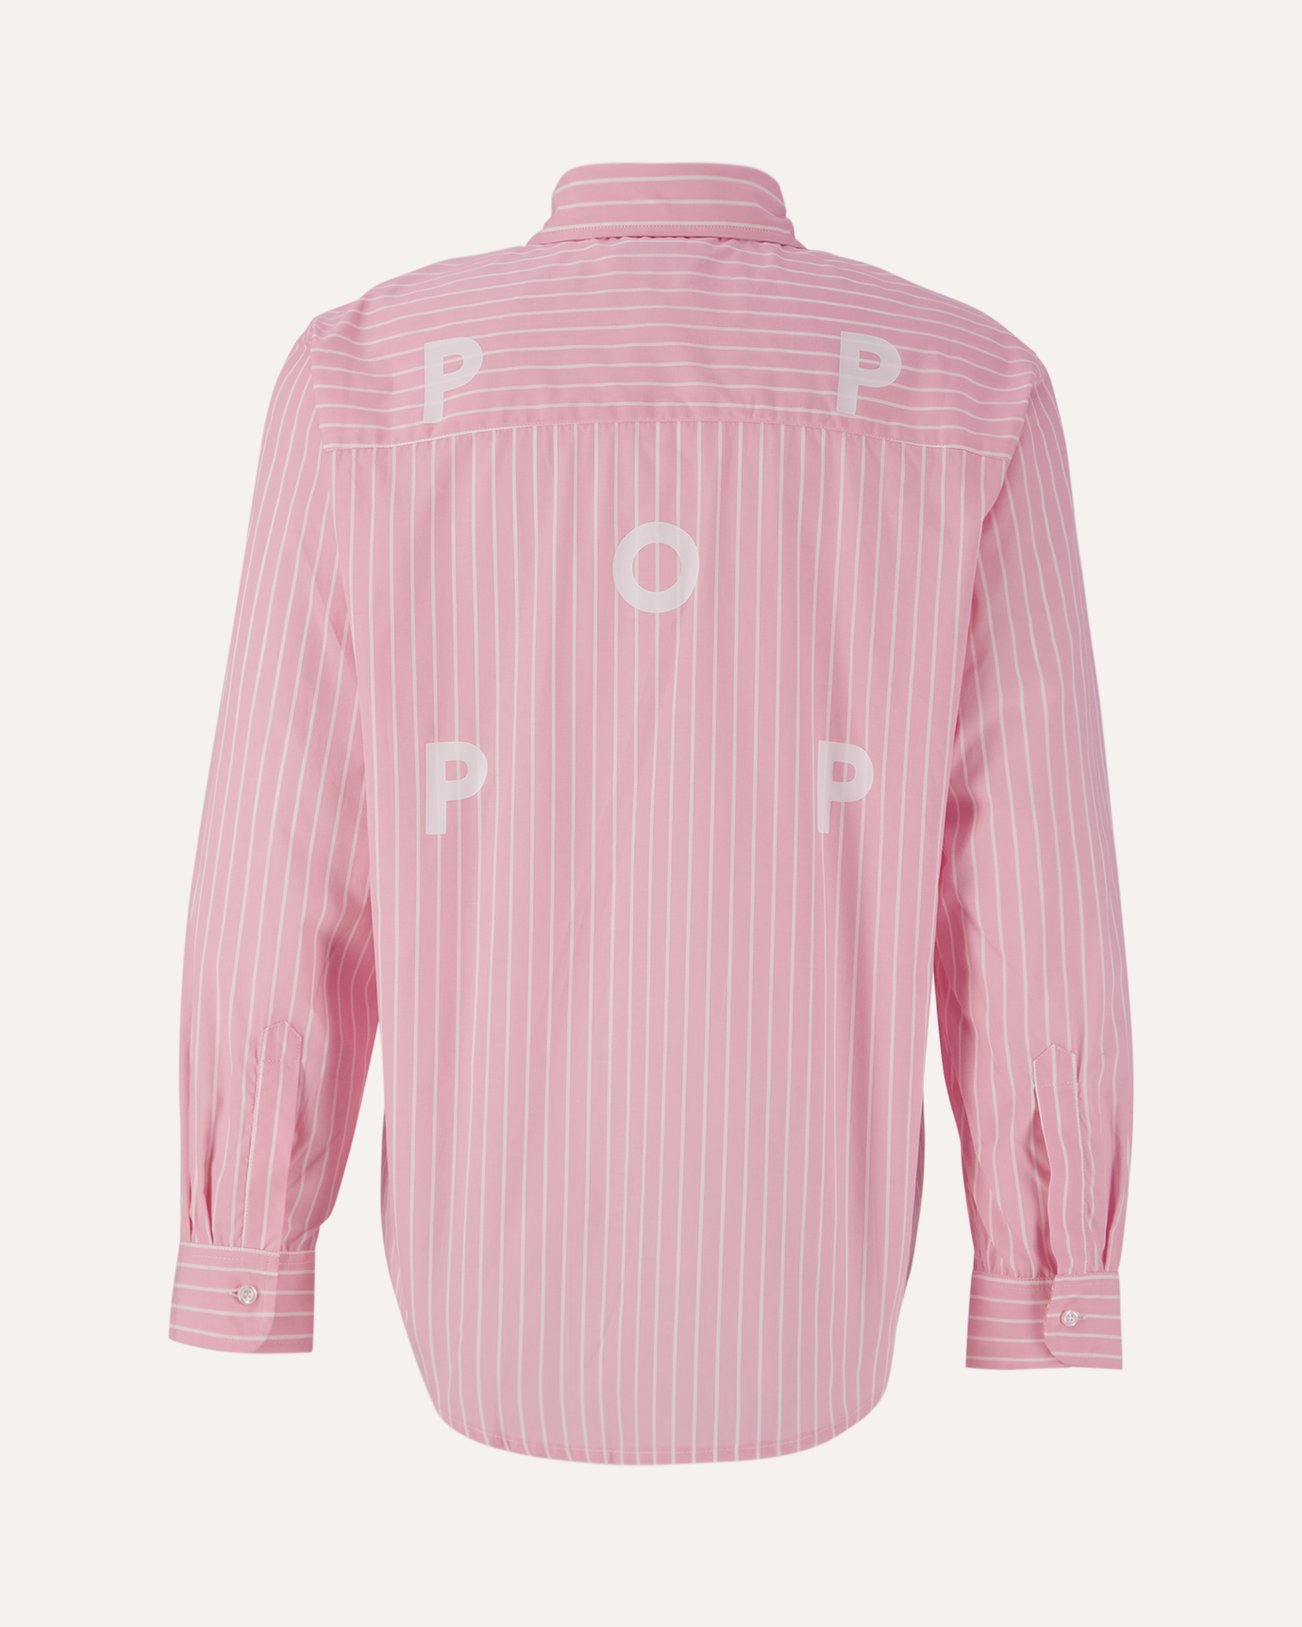 POP Trading Company Logo Striped Shirt ROSE 1